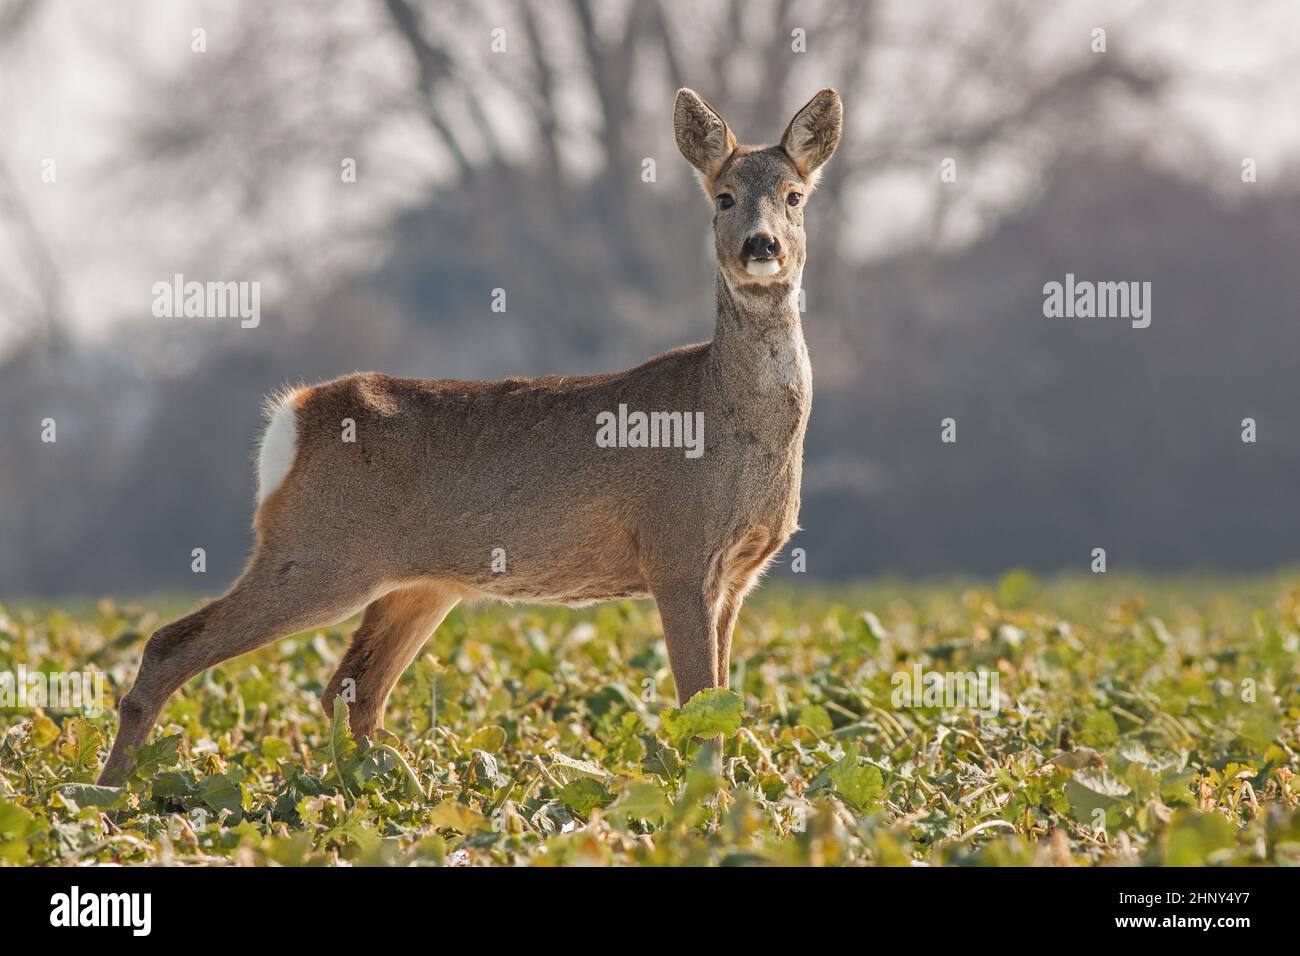 Spring in the nature. Roe deer, Capreolus capreolus, doe on rapessed field. Wild animal in winter coating. Stock Photo